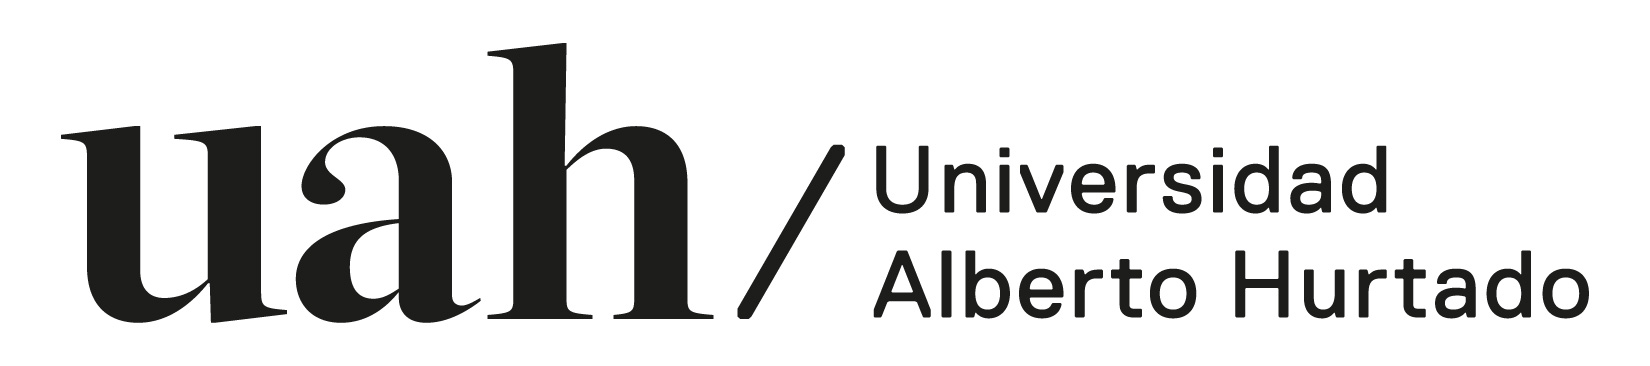 Logo_uah_negro-01.jpg